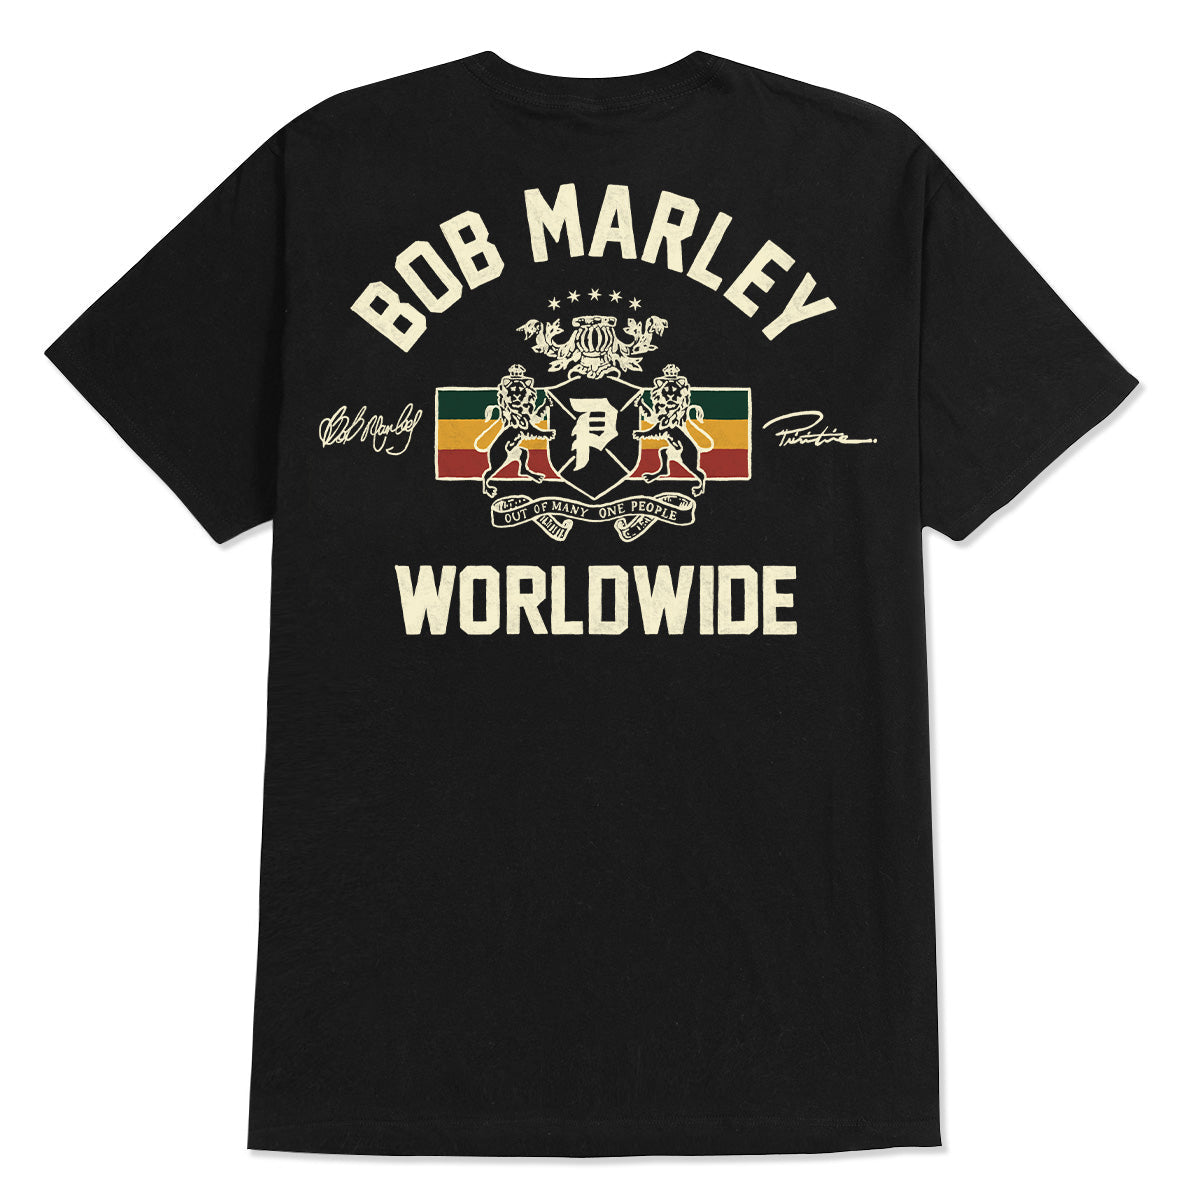 Primitive x Bob Marley Heritage T-Shirt - Black image 1